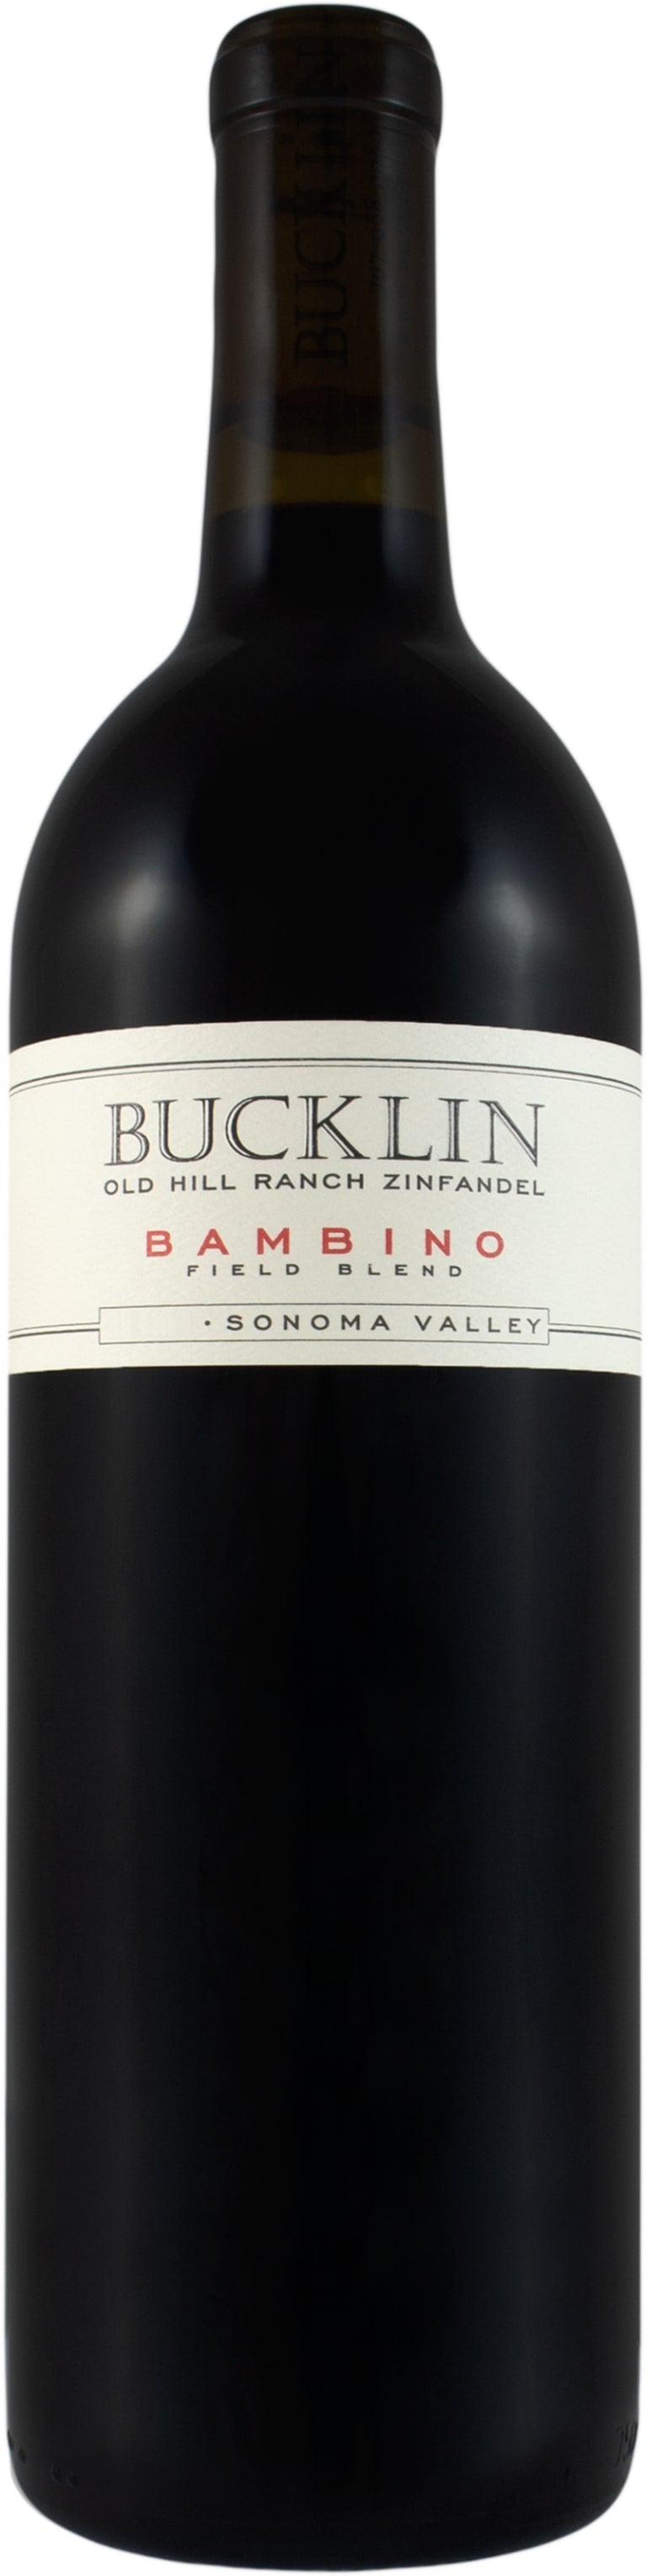 Bucklin Zinfandel Old Hill Ranch "Bambino" Sonoma Valley 2019